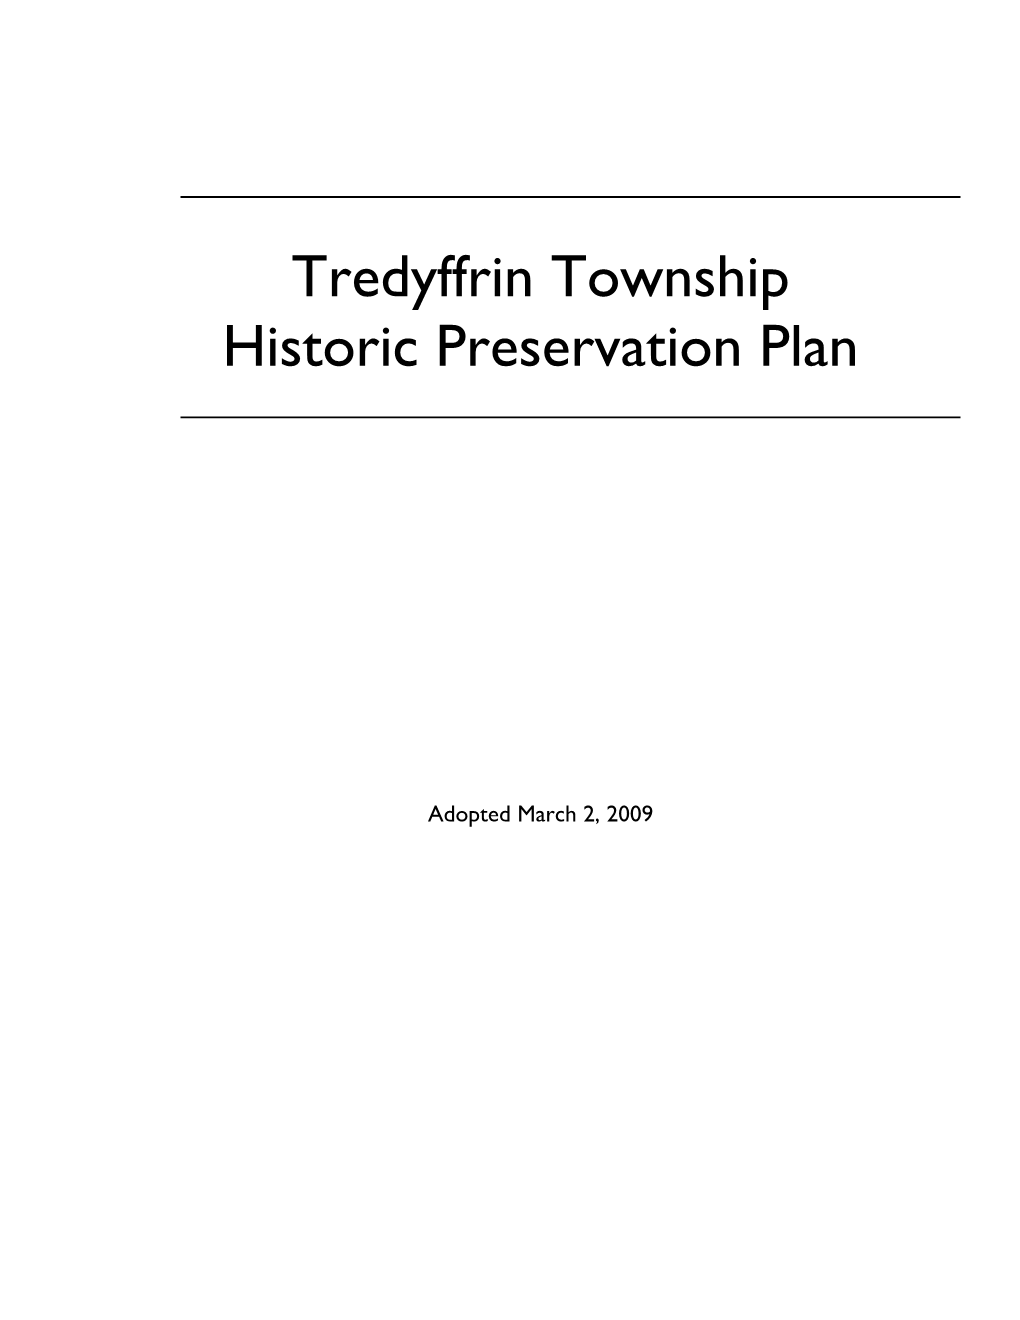 Tredyffrin Township Historic Preservation Plan